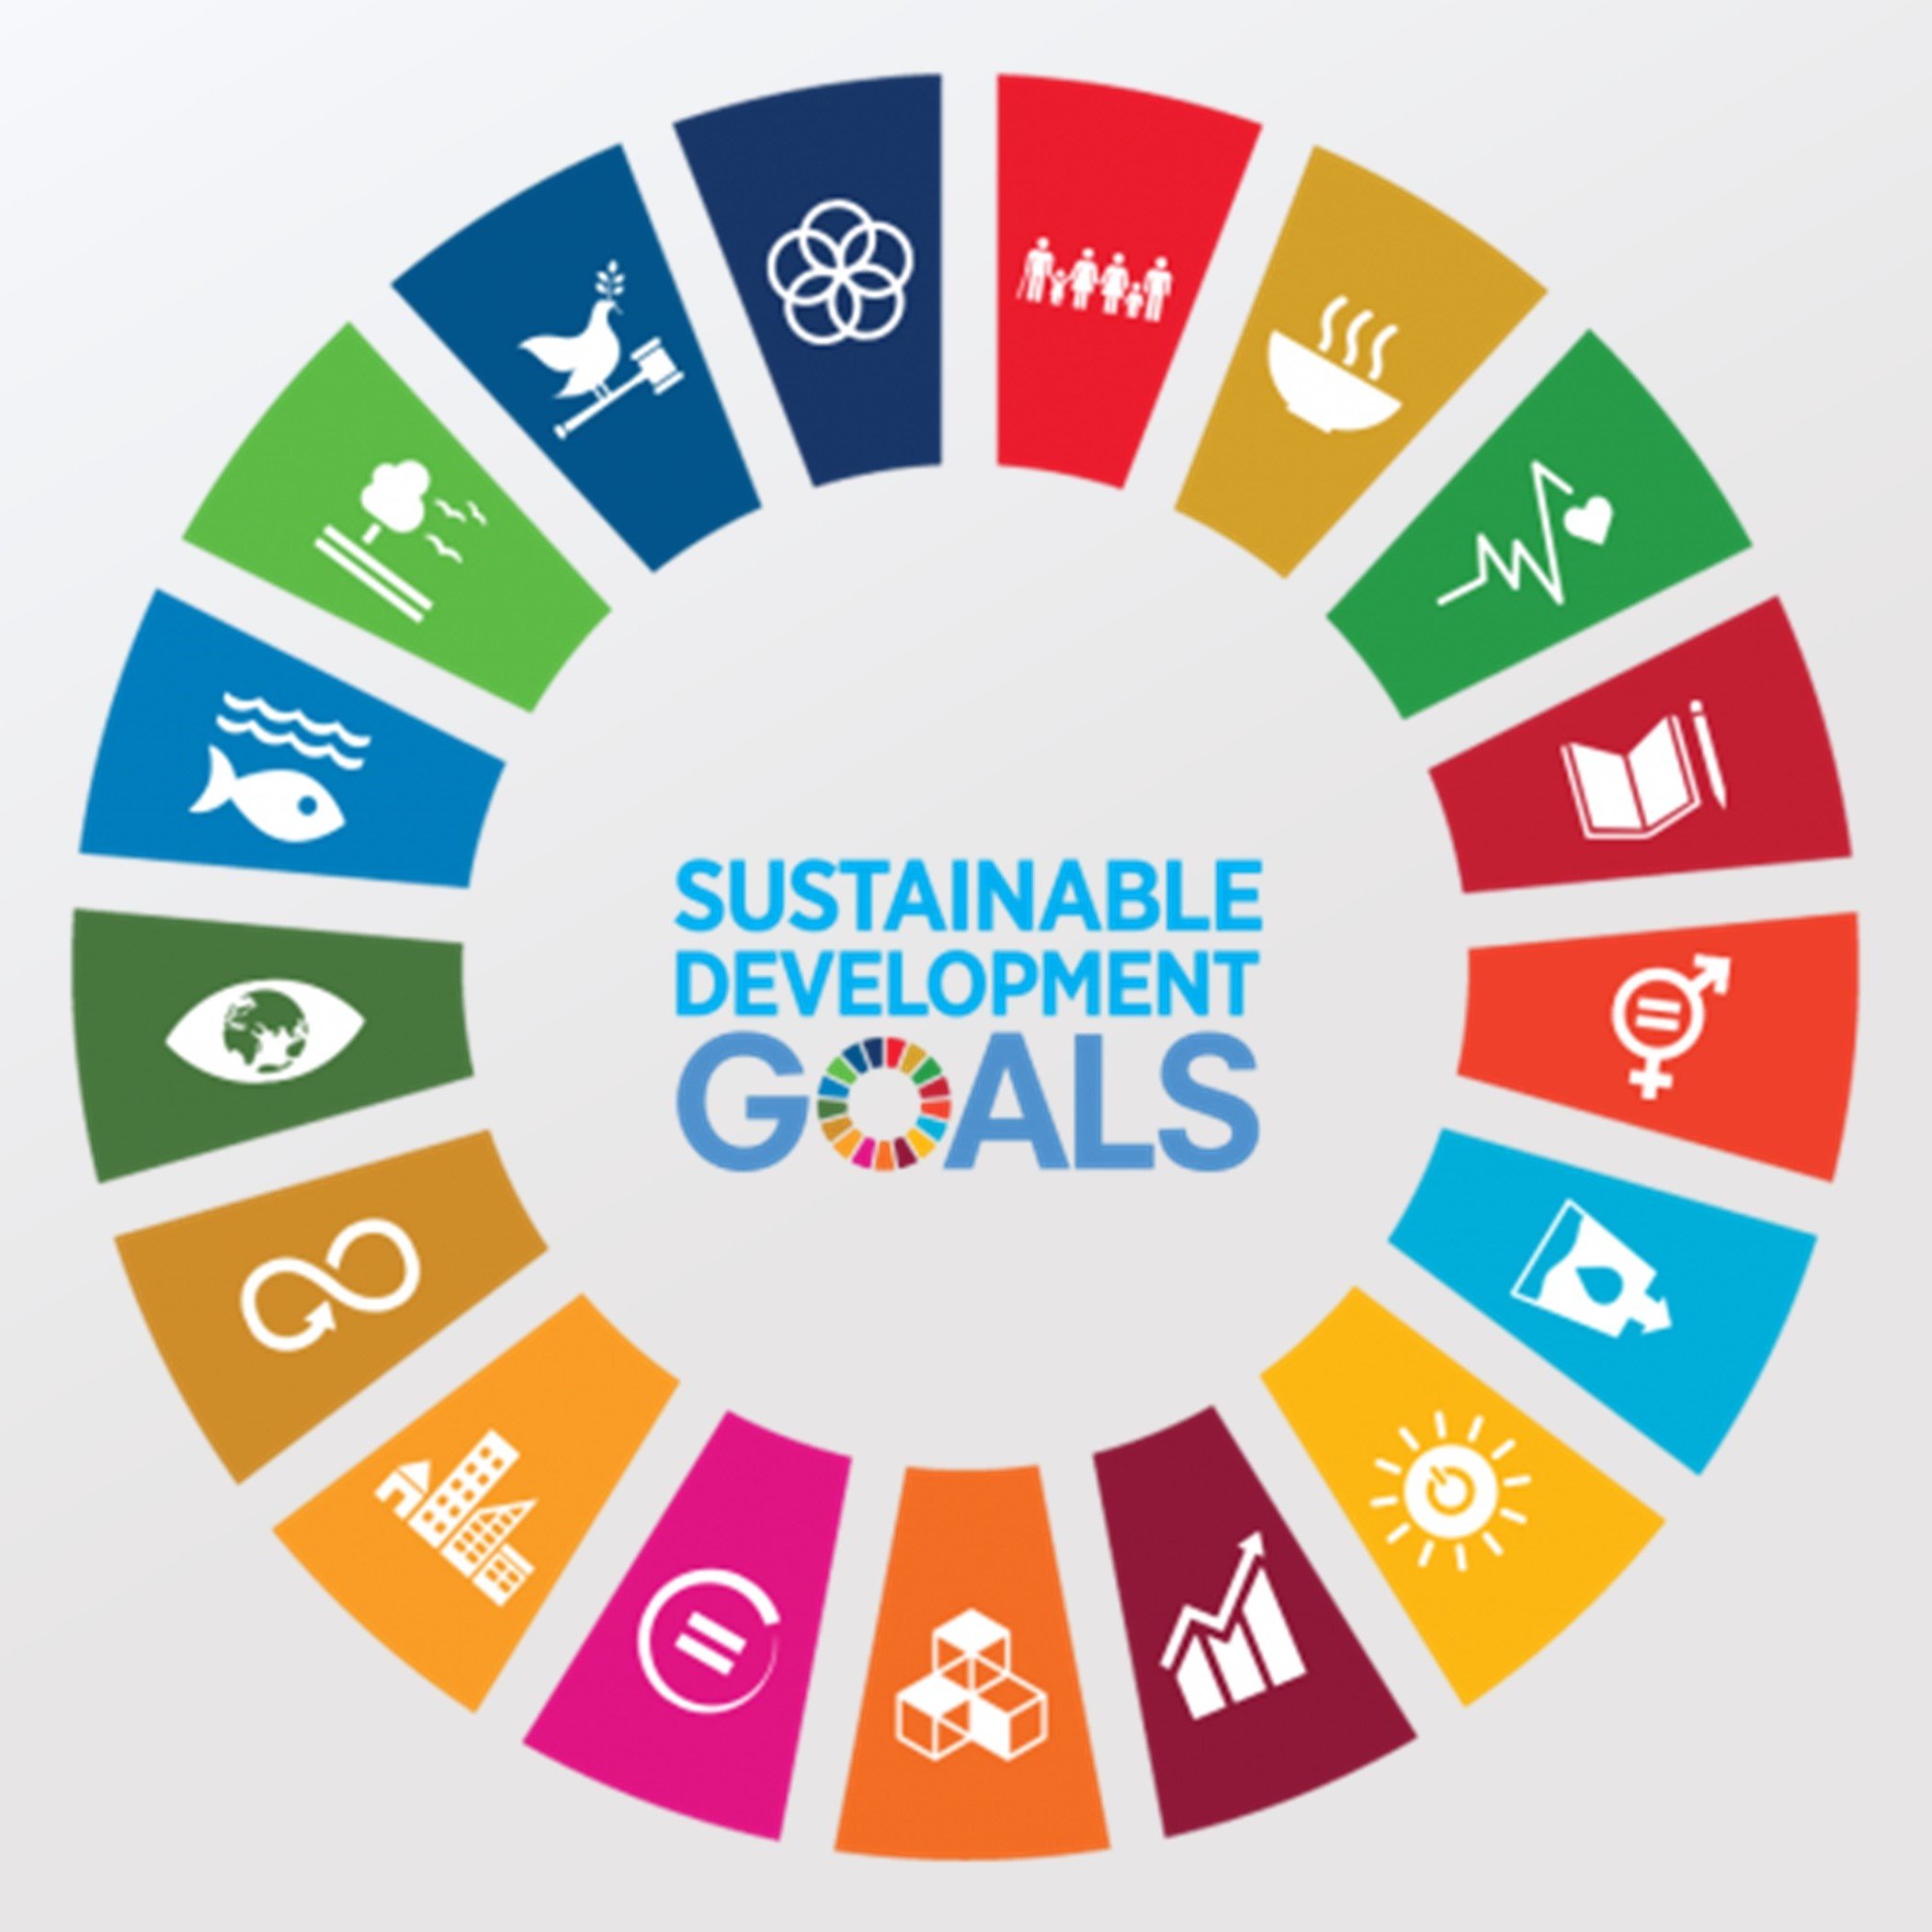 SDG - Sustainable Development Goals